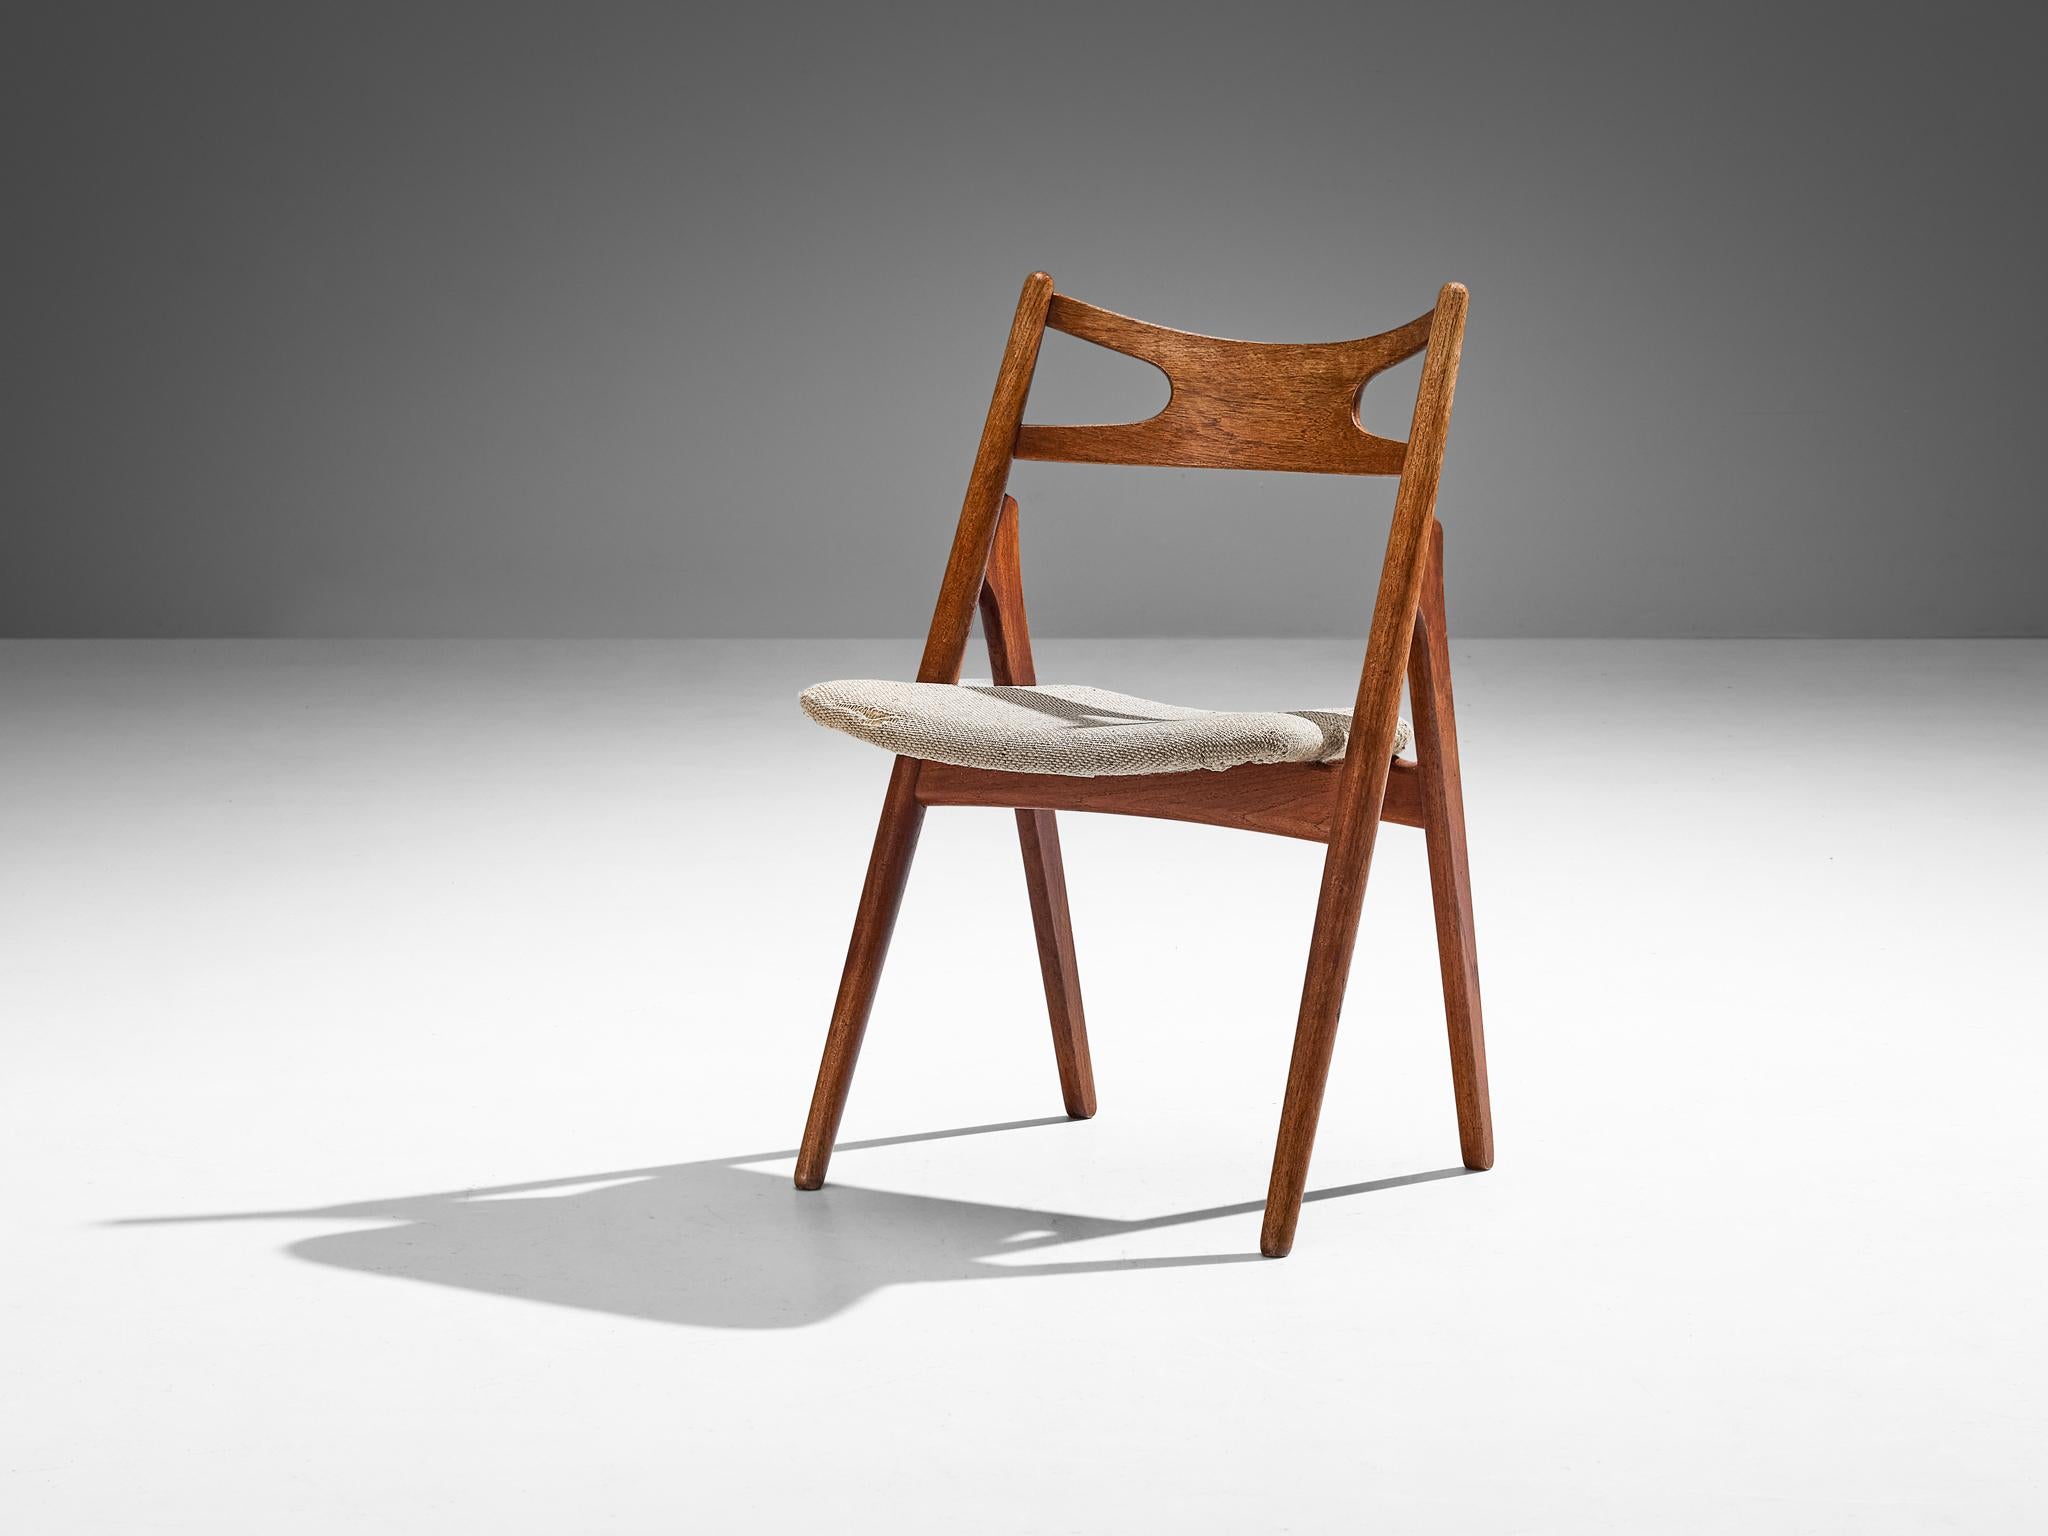 Hans J. Wegner for Carl Hansen & Søn, 'Sawbuck' dining chair, model CH29, teak, beige fabric, Denmark, design 1952 

Hans Wegner's chair exemplifies a solid construction, despite its minimalistic appearance. The chair's distinct feature is its